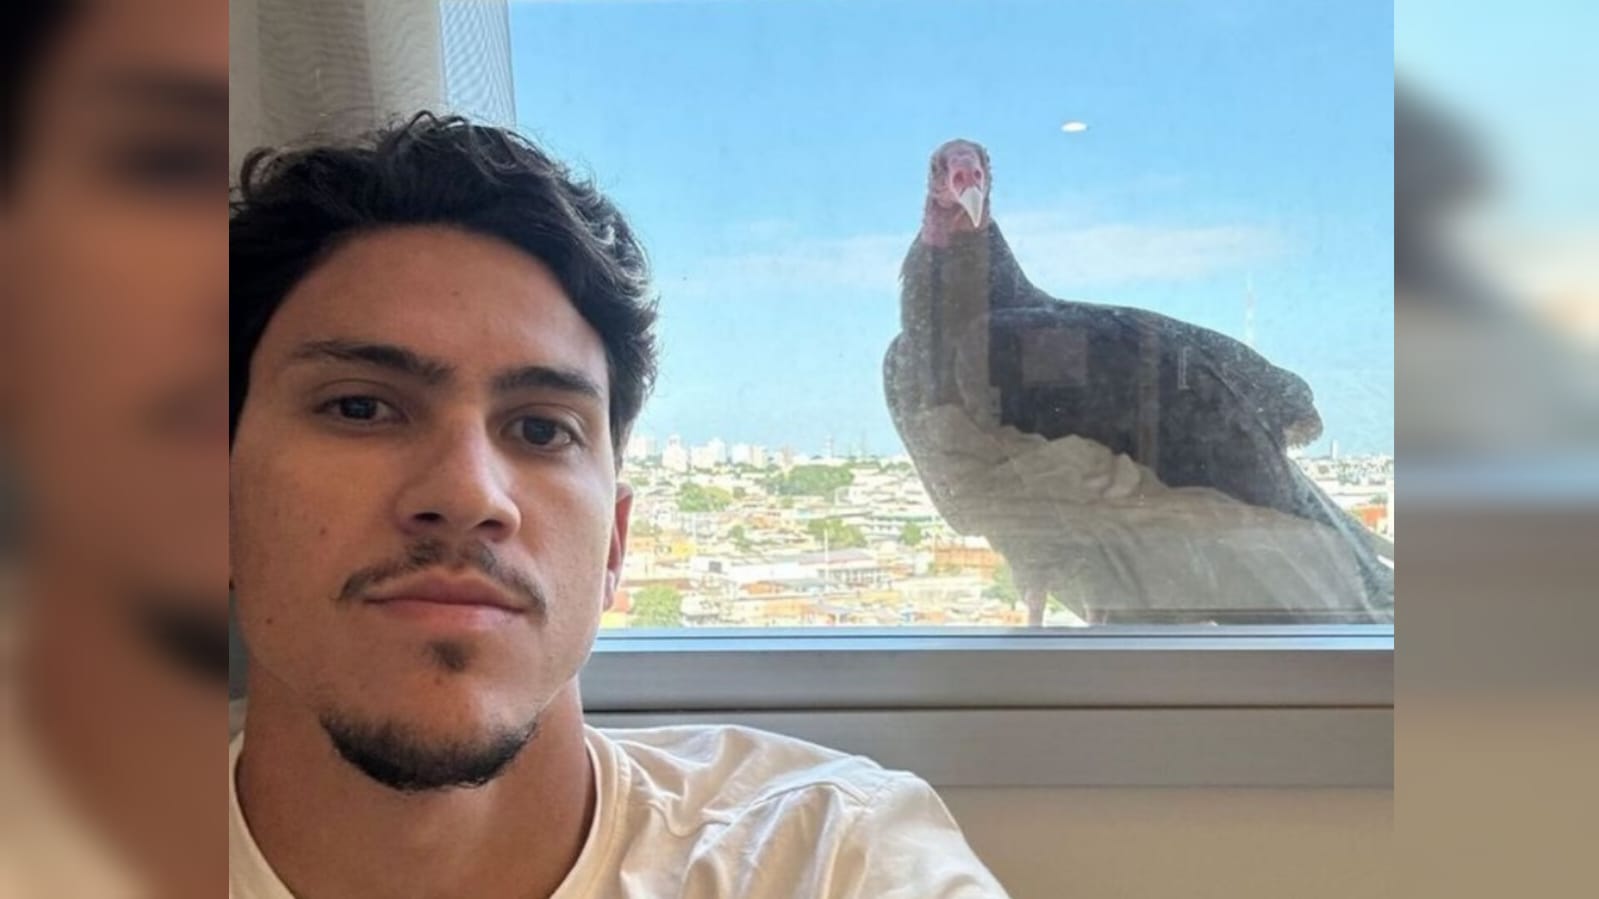 striker Pedro is woken up by vulture in hotel before Flamengo game in Manaus